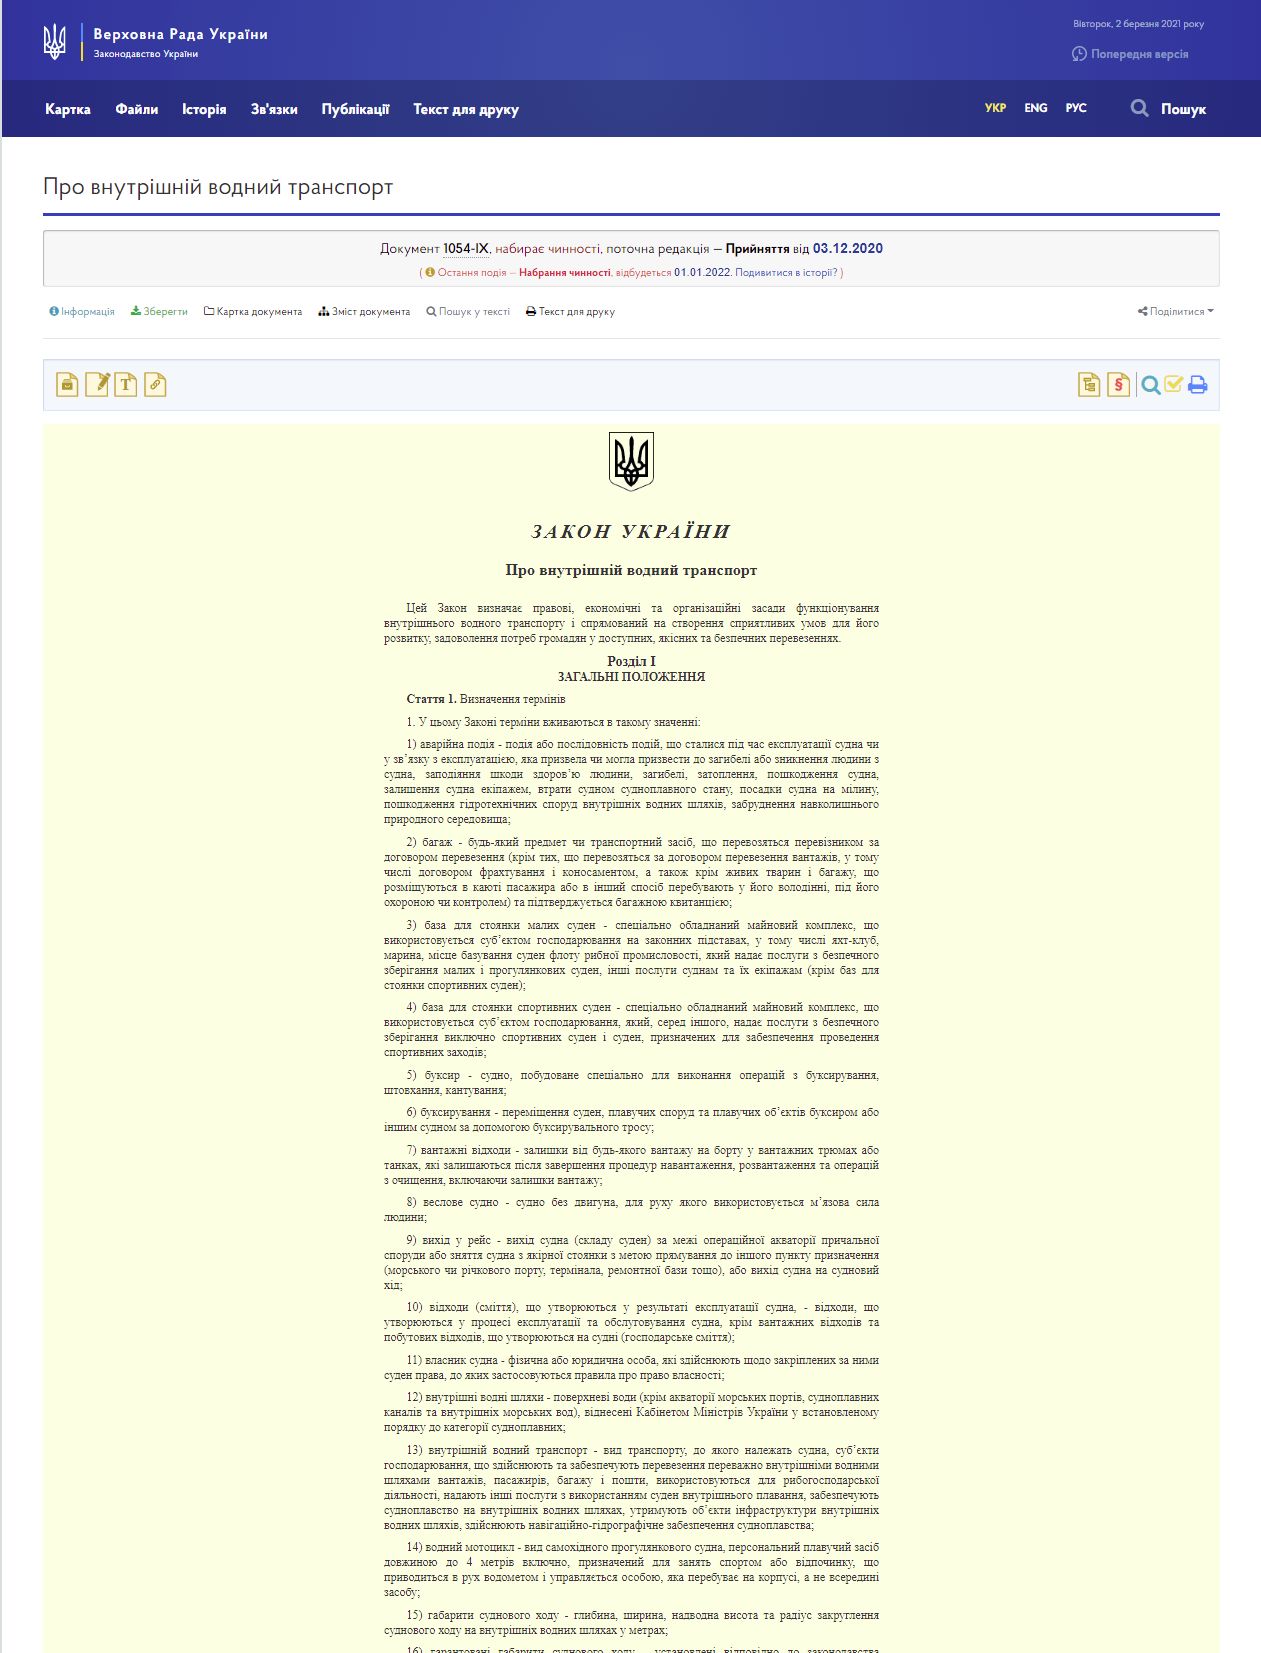 https://zakon.rada.gov.ua/laws/show/1054-20#Text